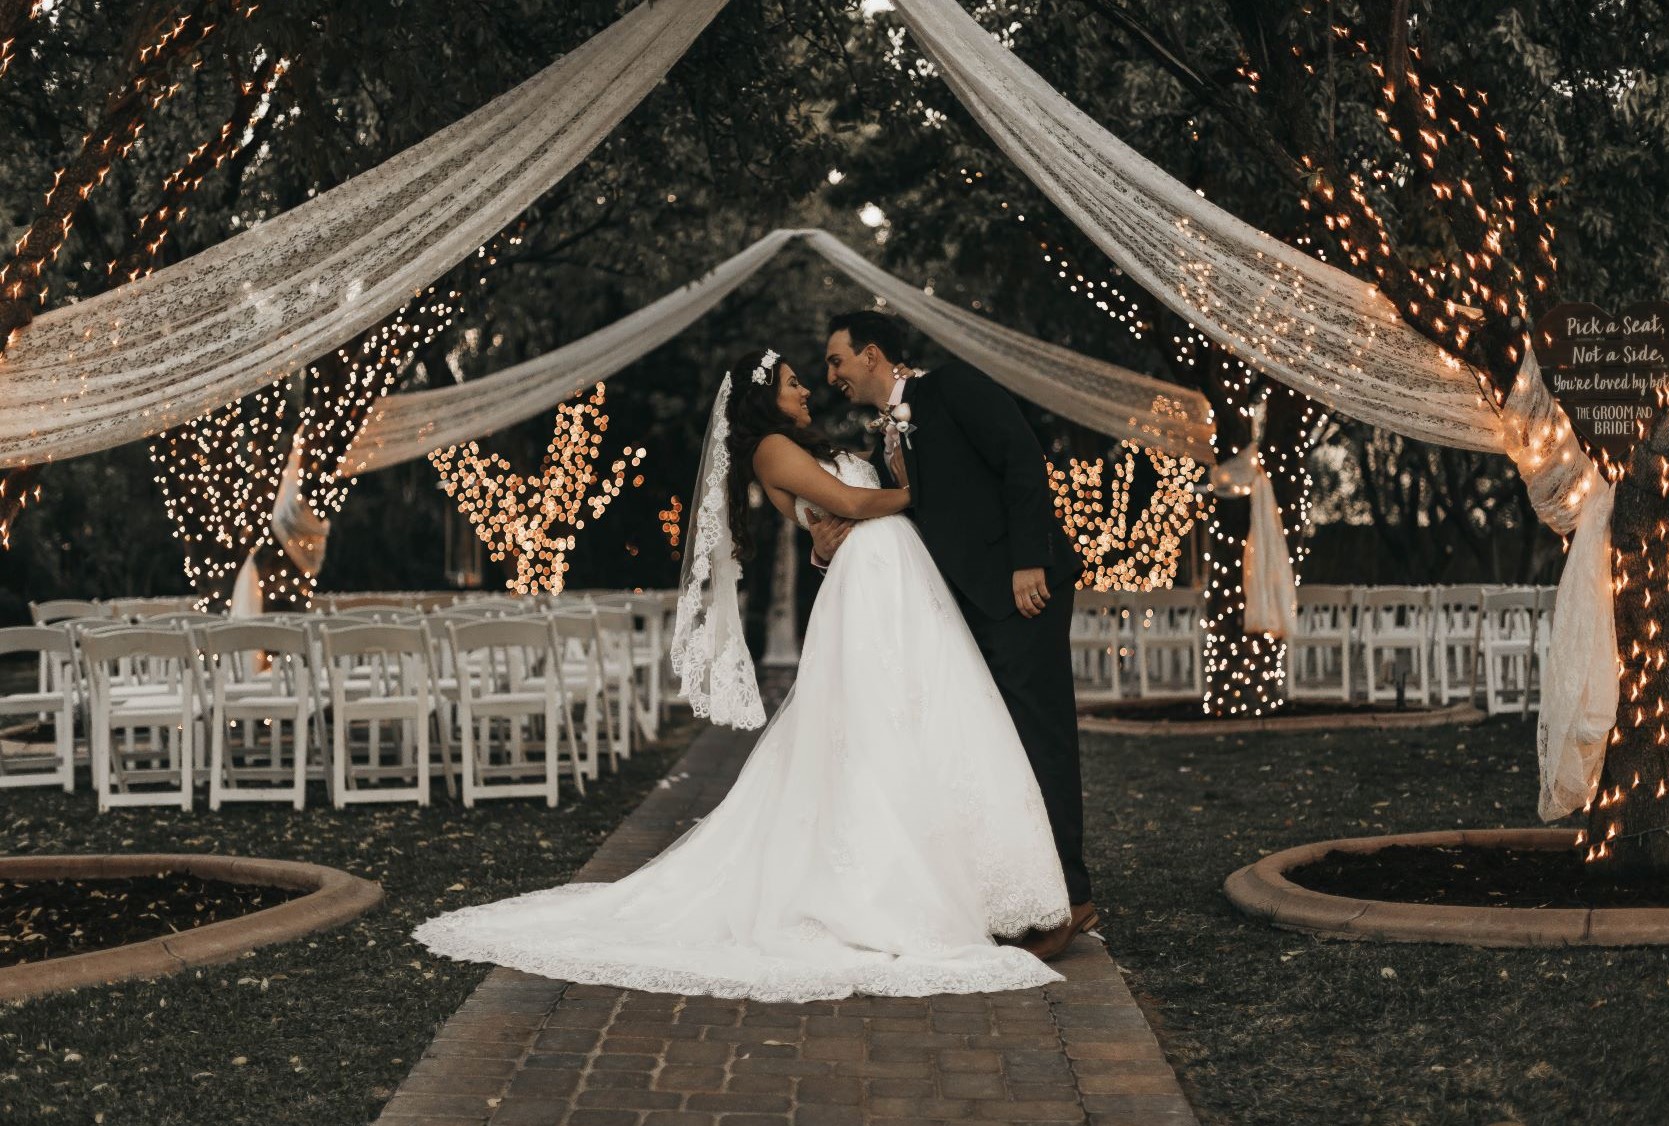 Wedding Trends 2020 - Bride and Groom standing under fairy lights